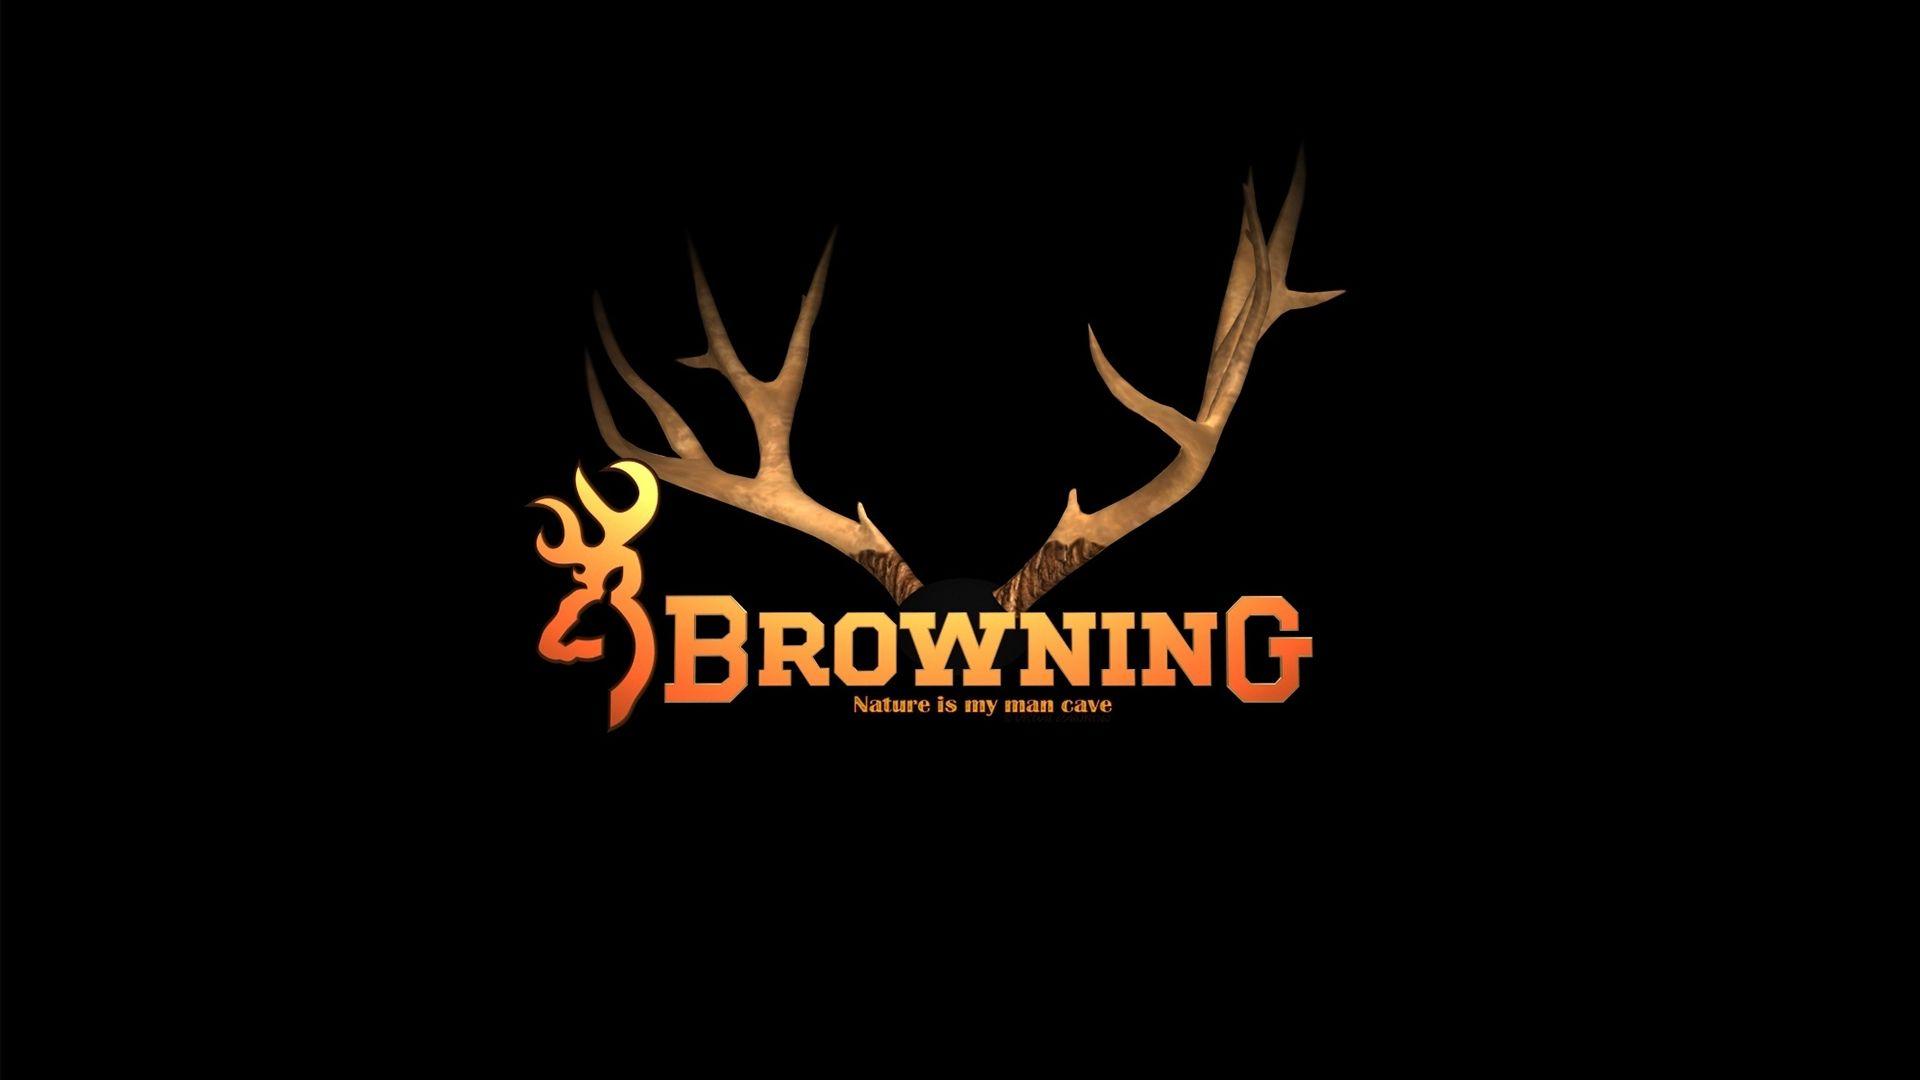 Browning Desktop Wallpapers - Top Free